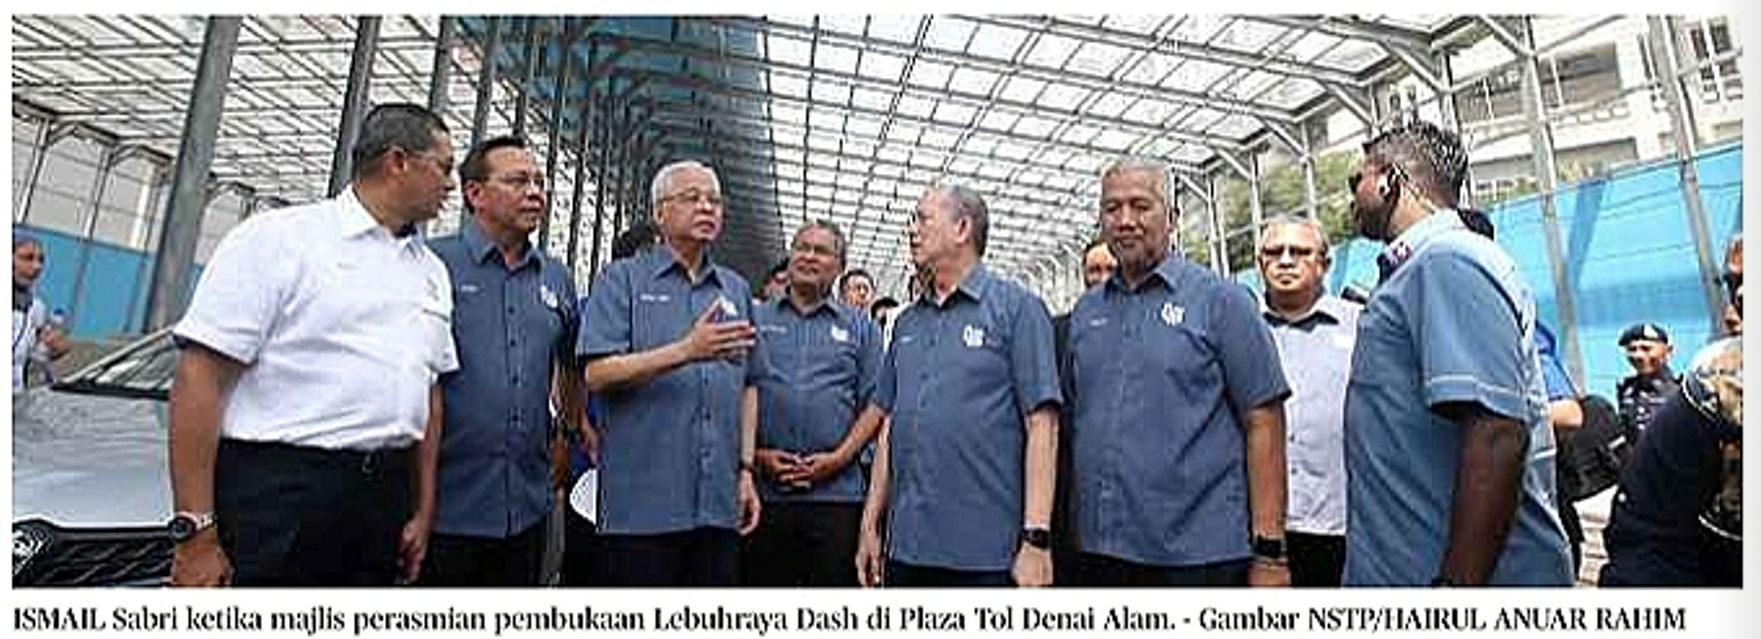 Harian Metro | Datuk Seri Ismail Sabri Yaakob ketika majlis pembukaan Lebuhraya DASH di Plaza Tol Denai Alam